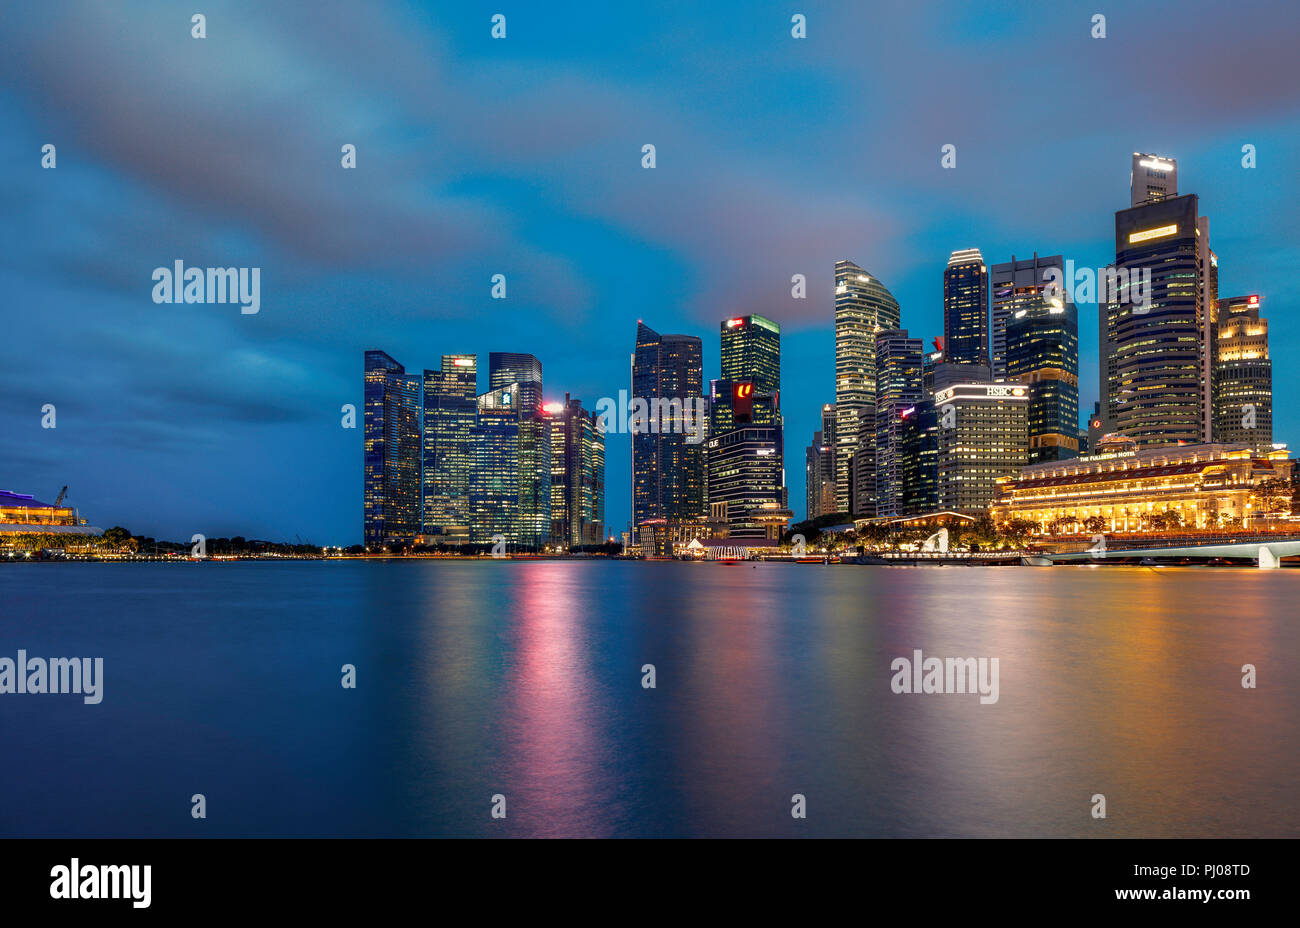 The Singapore city skyline from the Esplanade, Singapore. Stock Photo